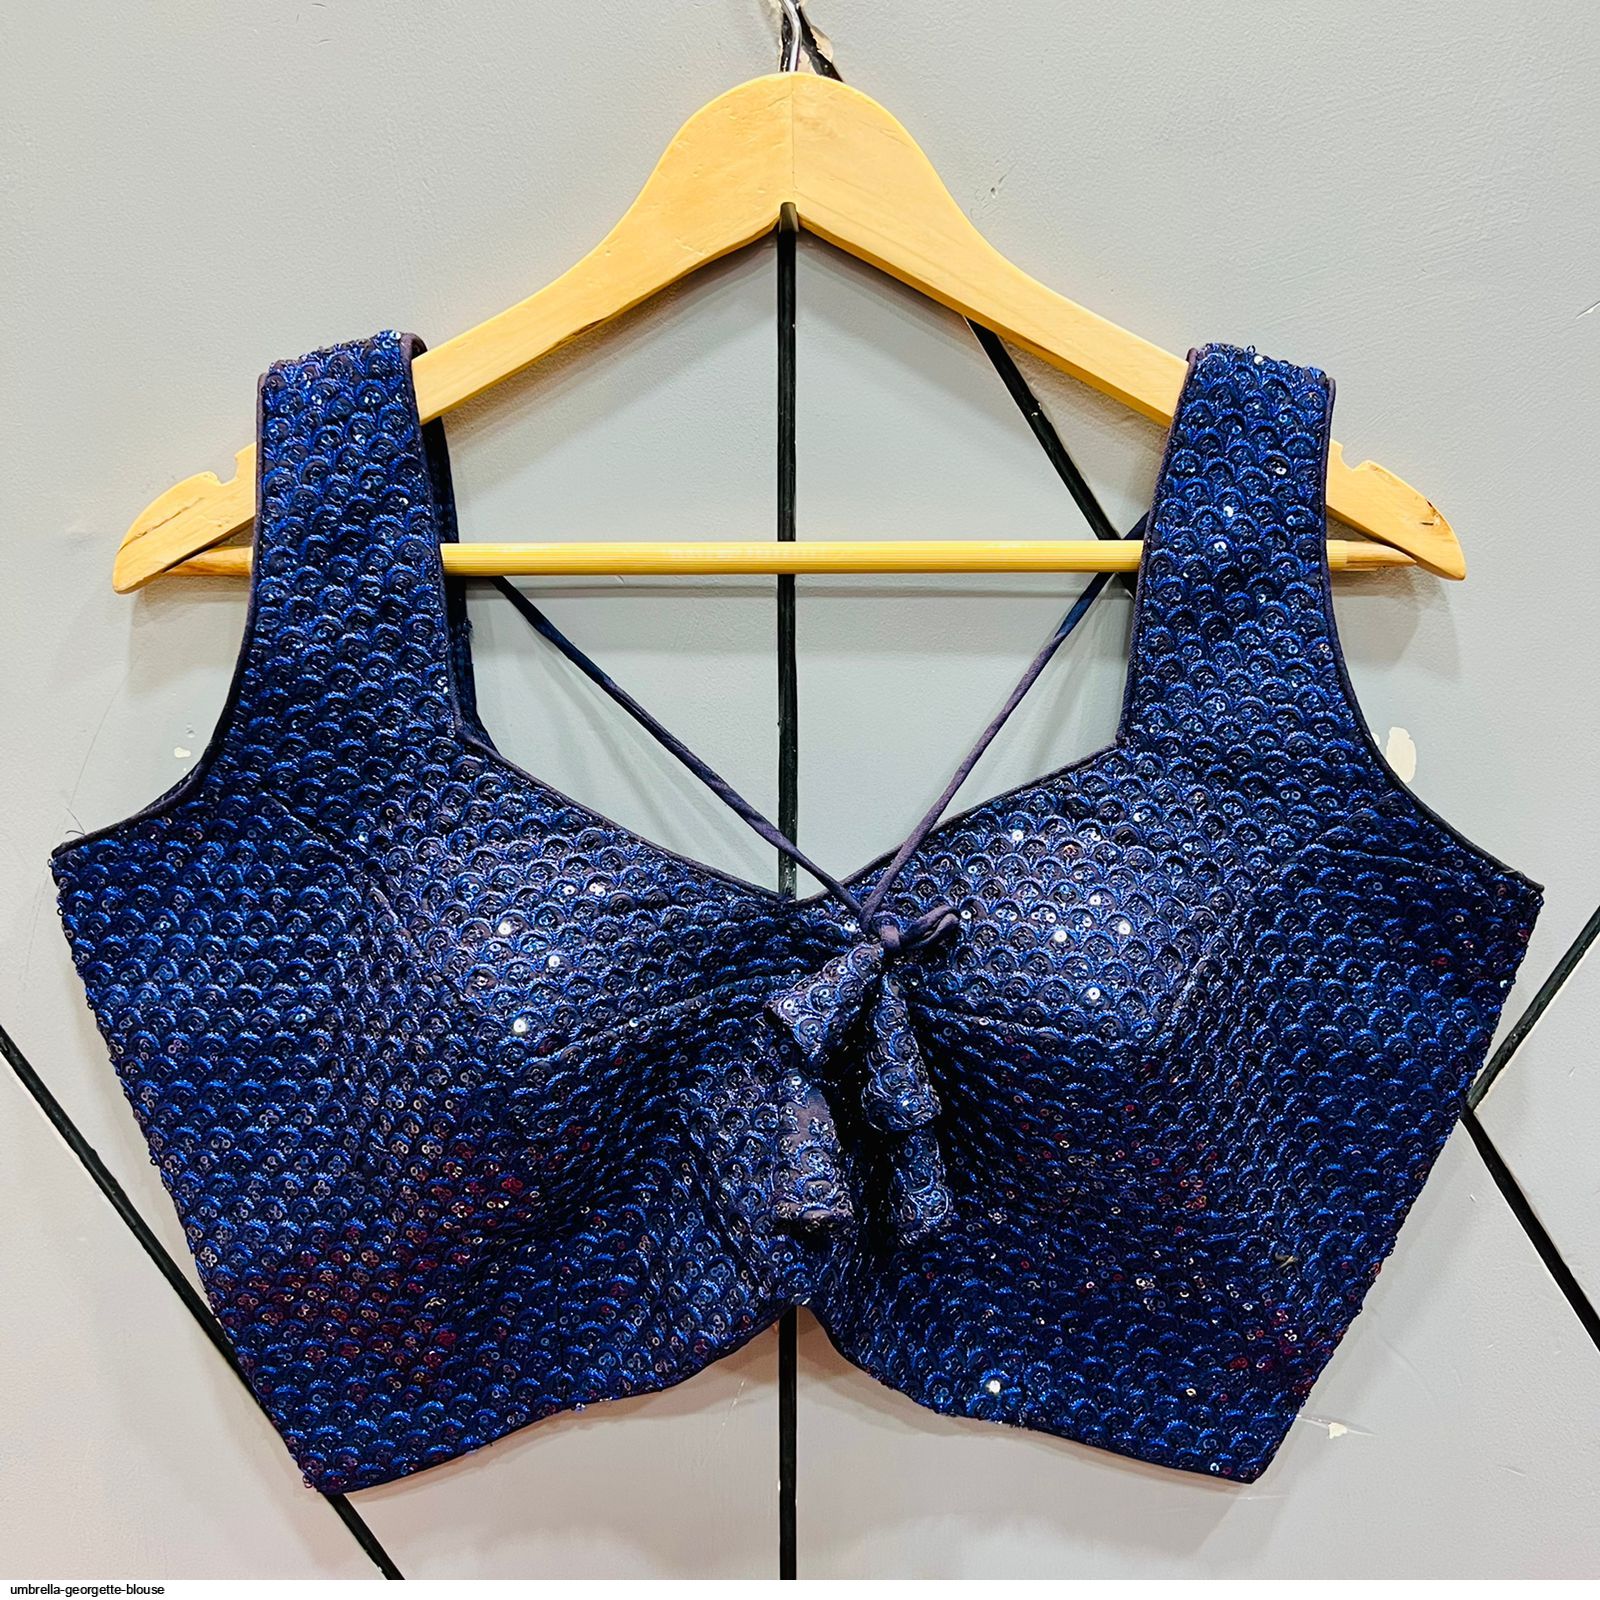 Women's Royal Blue Art Silk Umbrella Sleeves Readymade Blouse